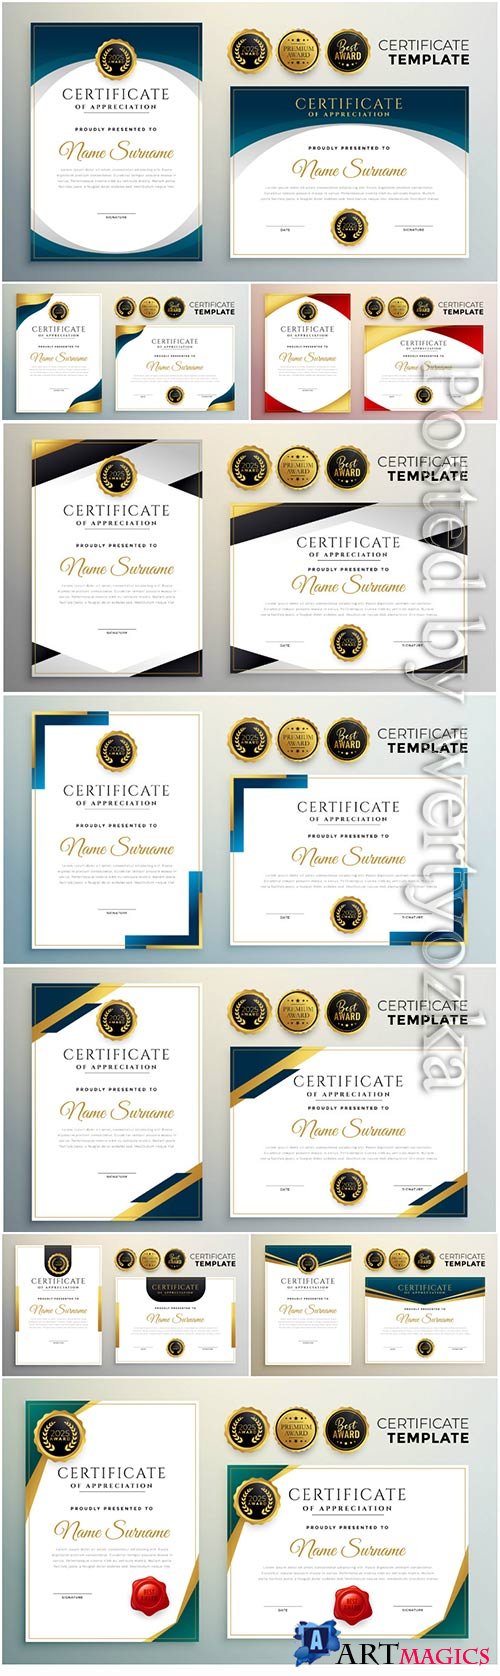 Creative certificate of appreciation template modern design